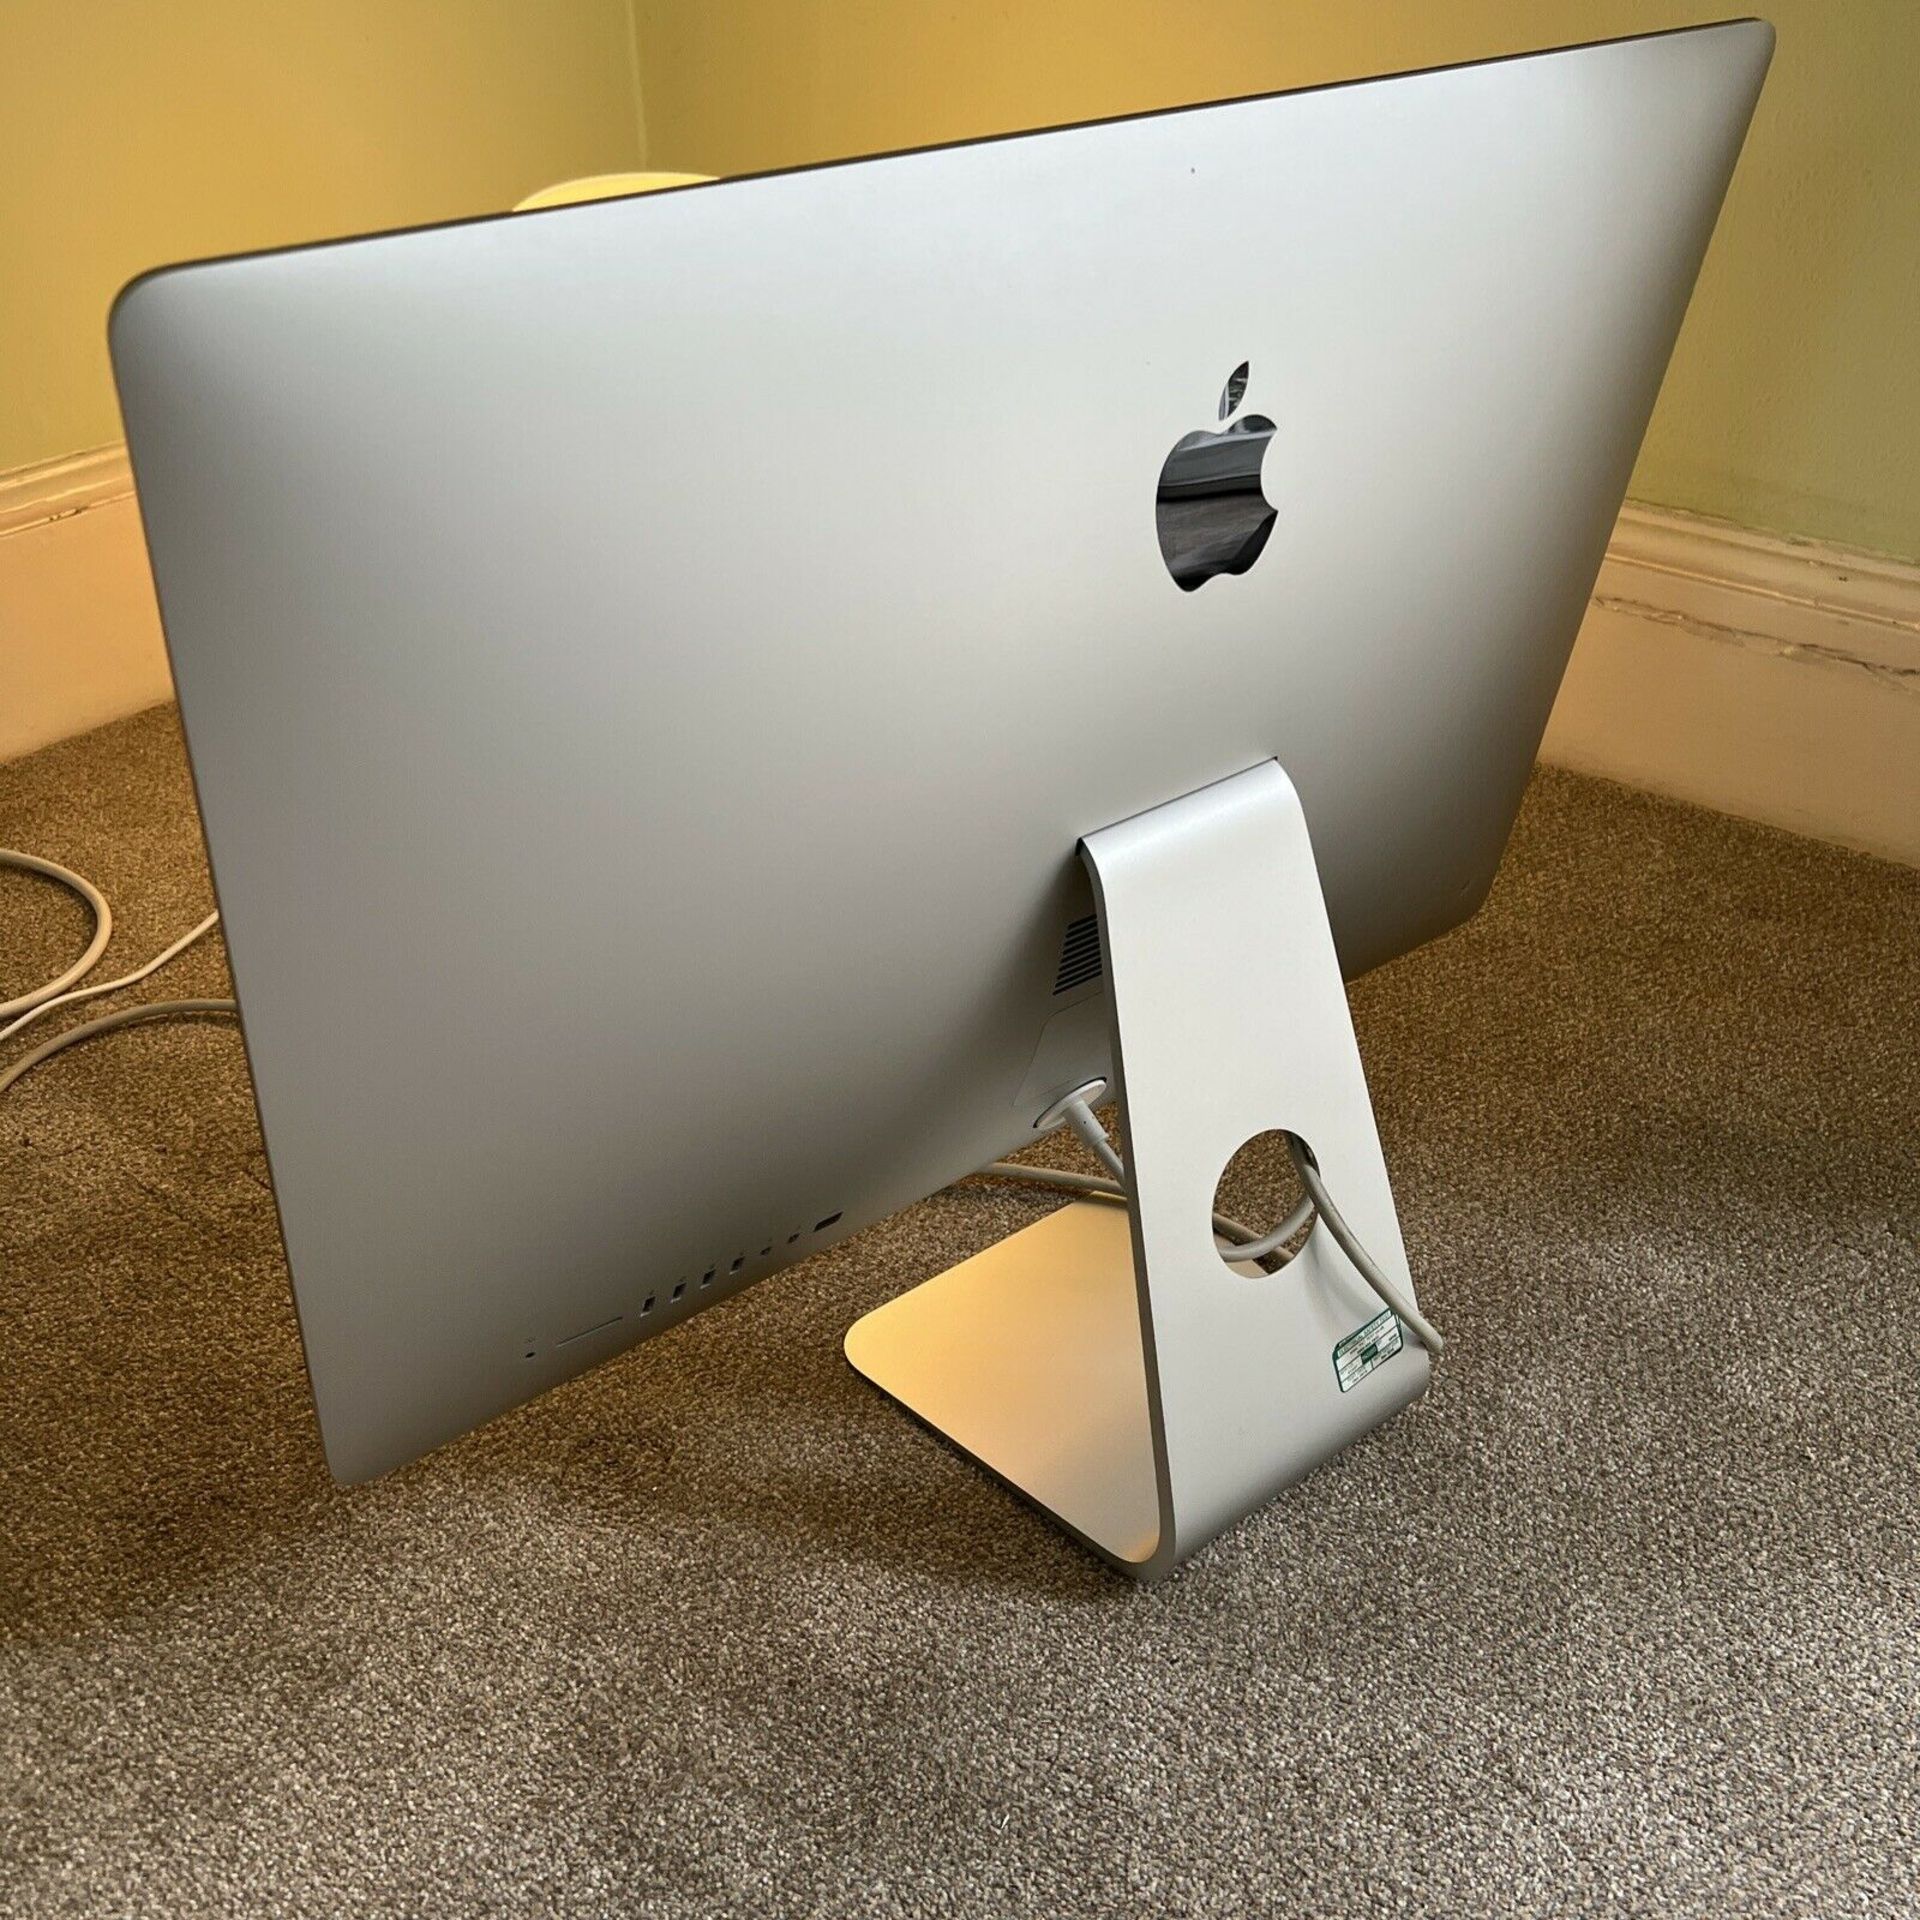 Apple iMac 21.5"" A1418 OS X Catalina Intel Core I5 8Gb DDR3 1TB HD GeForce GT 640M office - Image 5 of 5